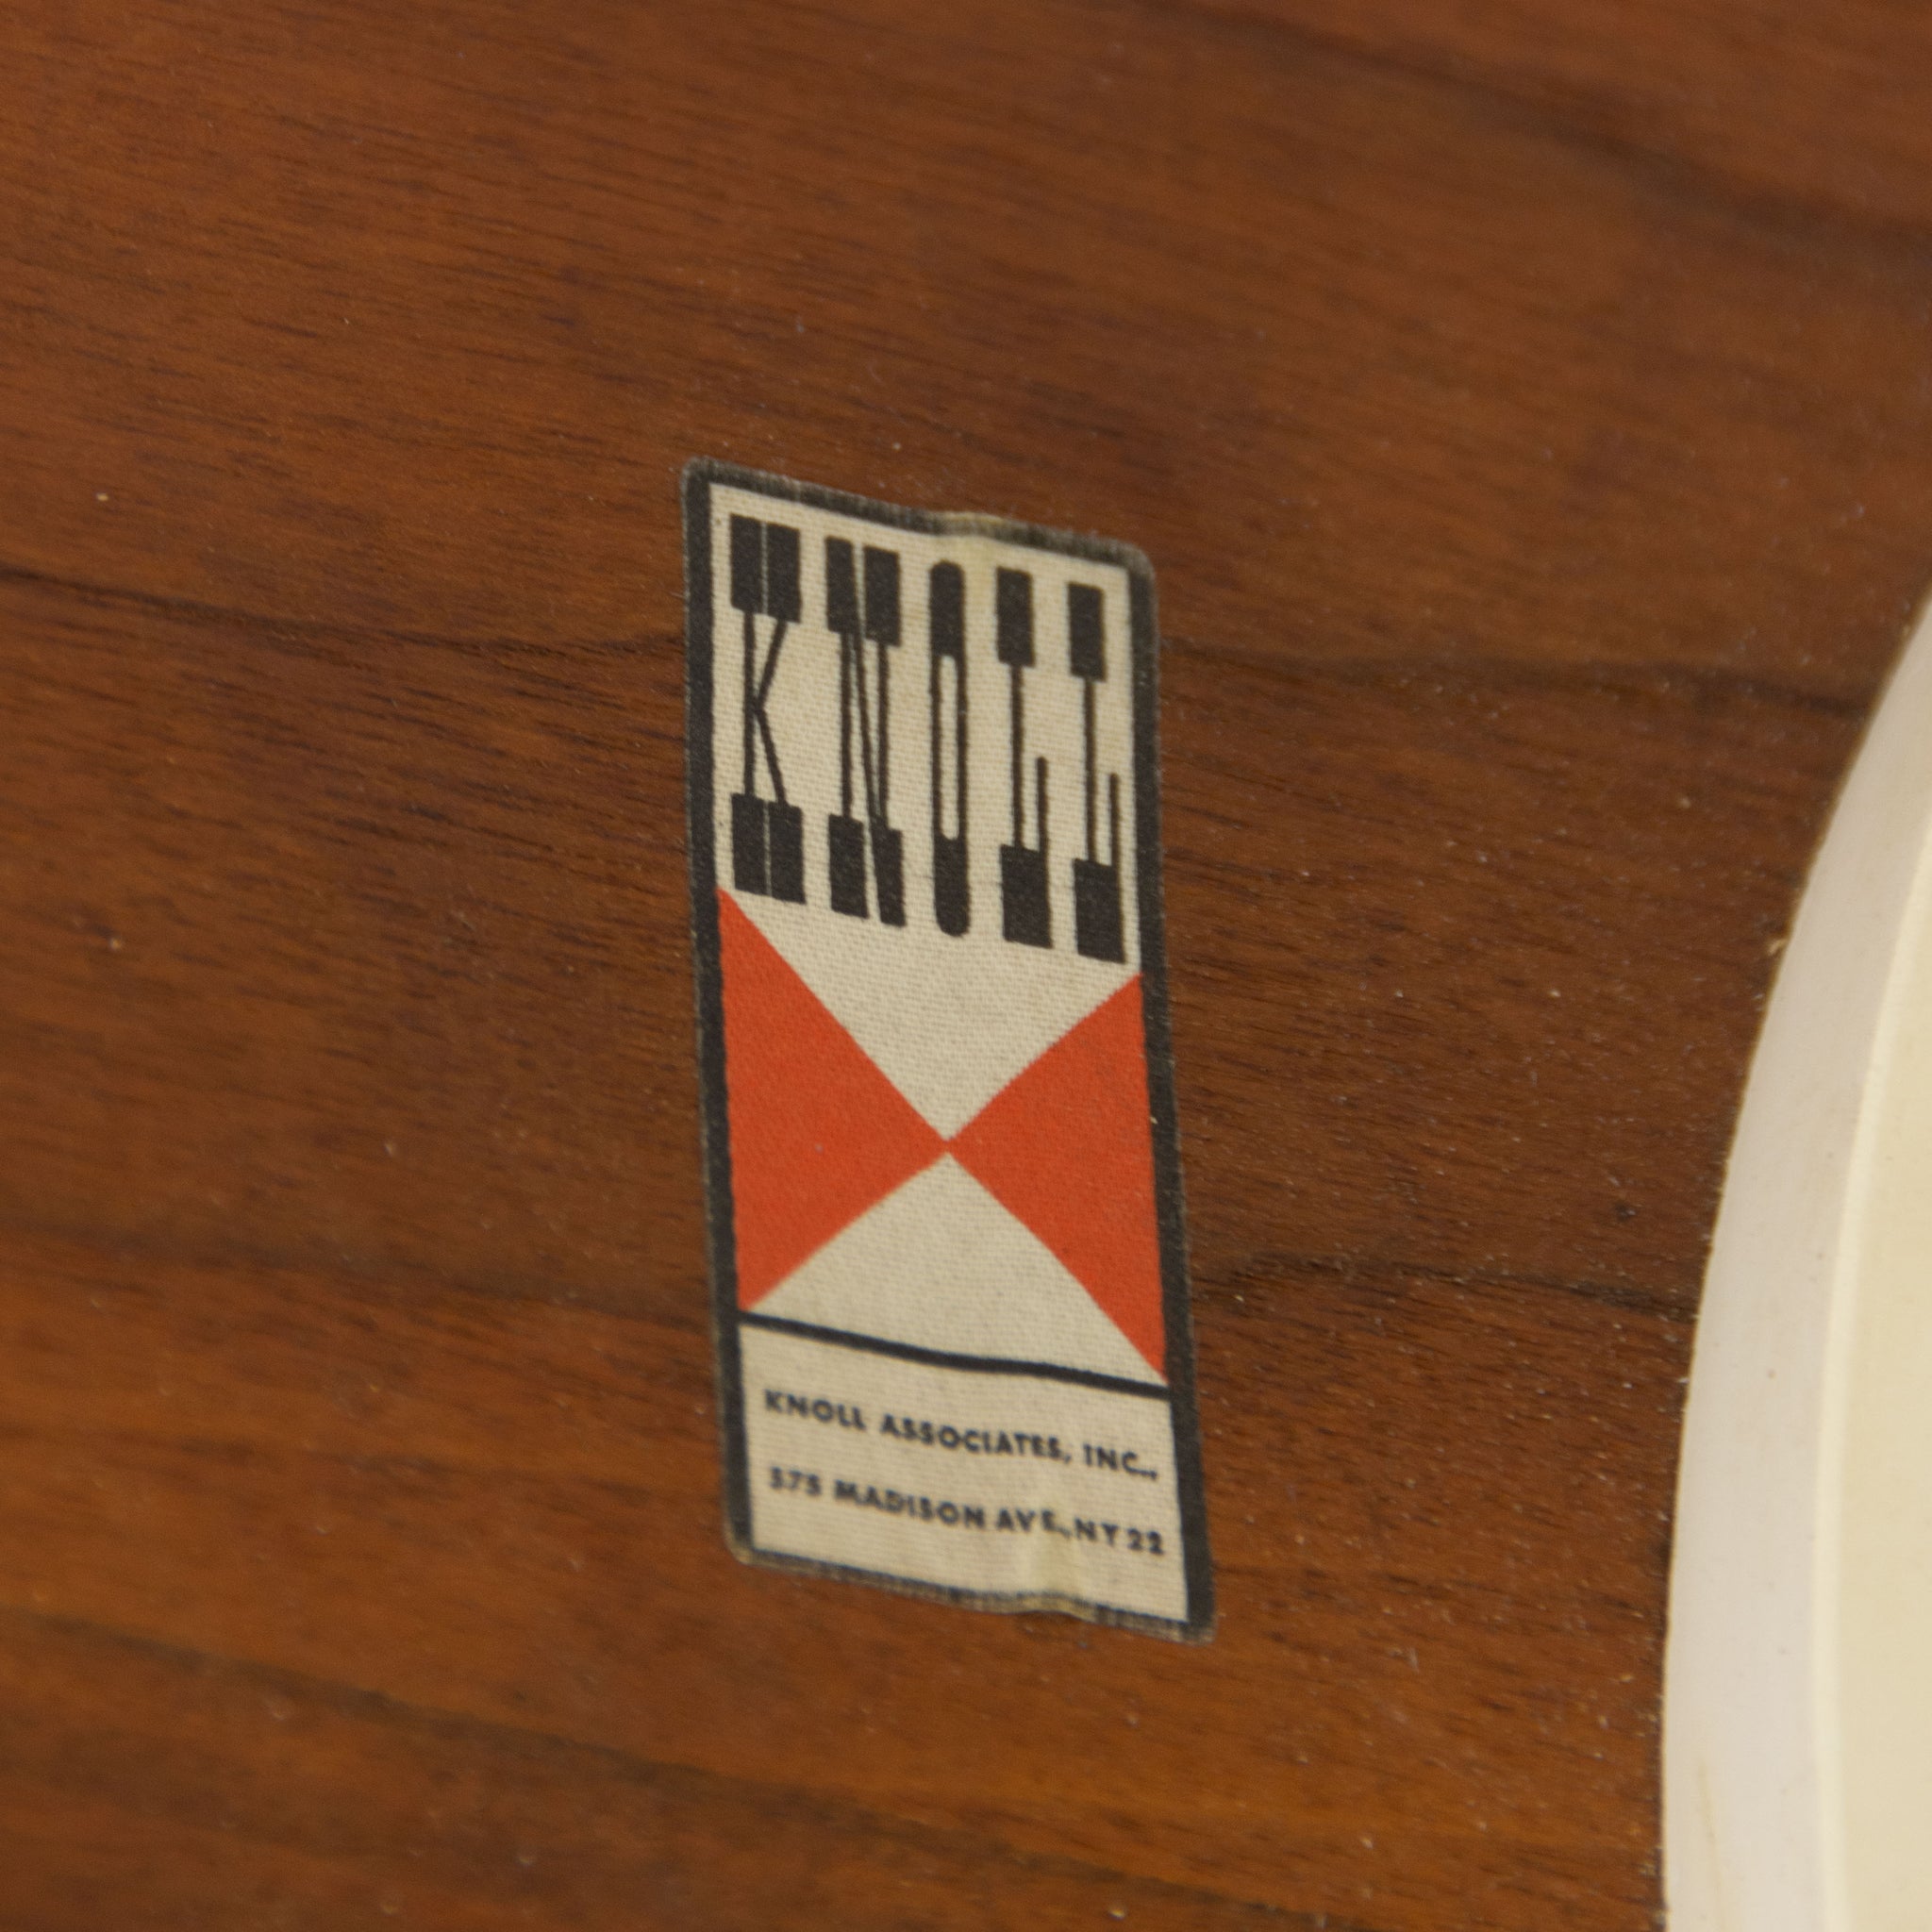 SOLD 1960s Vintage Eero Saarinen Knoll International 54 Inch Tulip Coffee Table Walnut